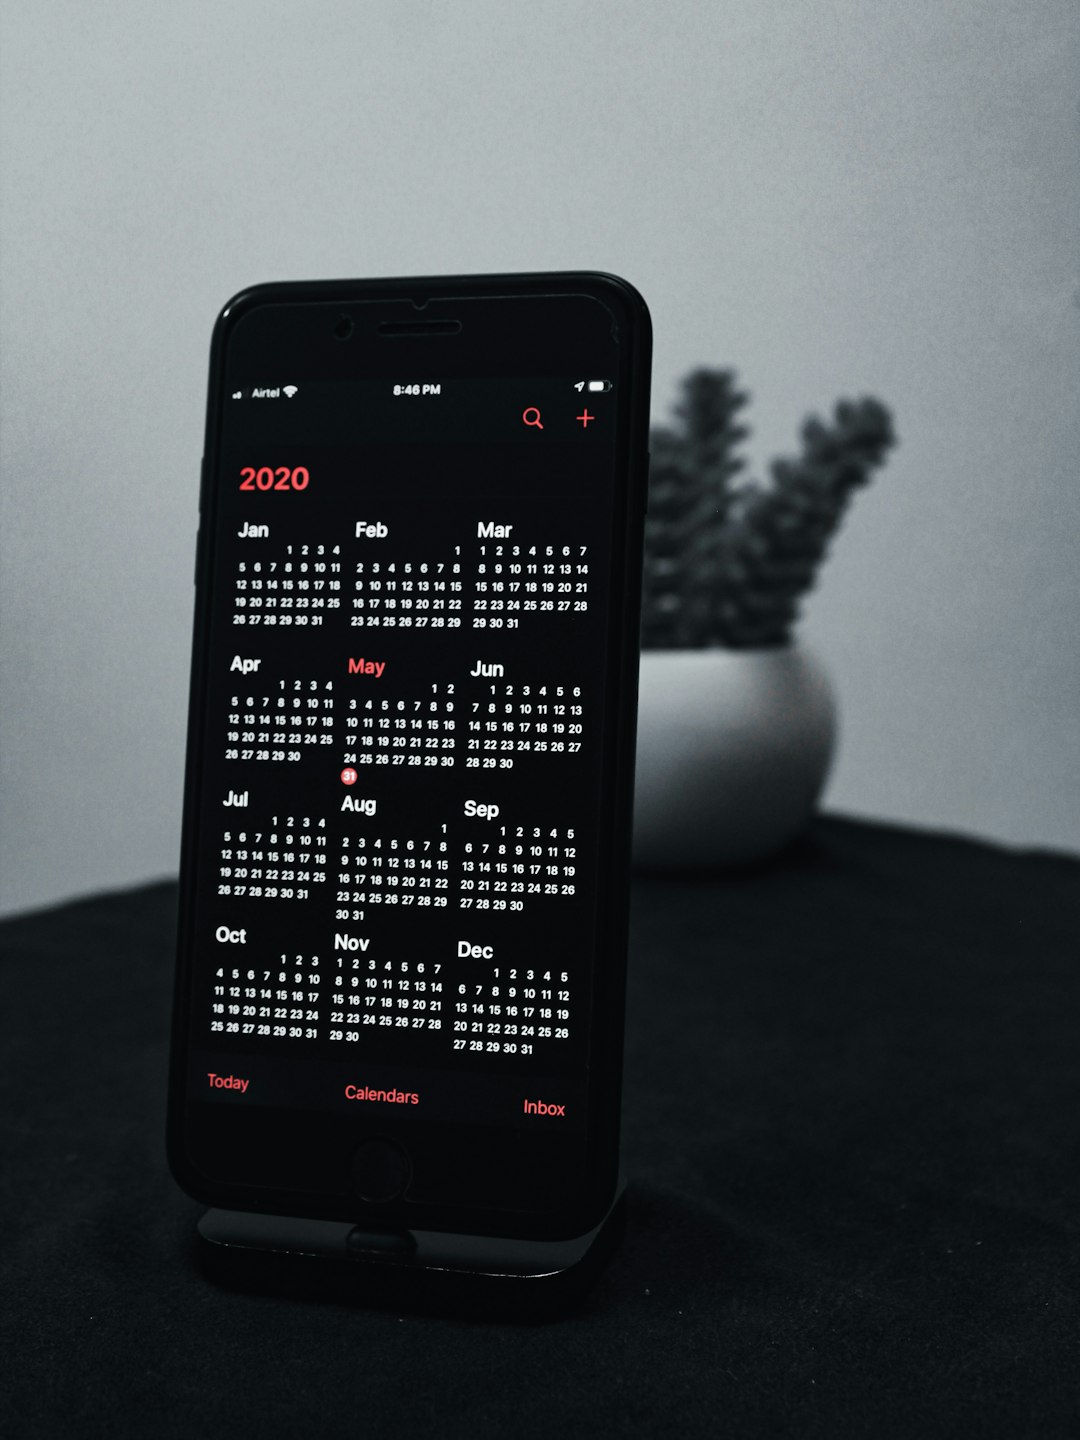 Phone Calendar Pictures Download Free Images on Unsplash